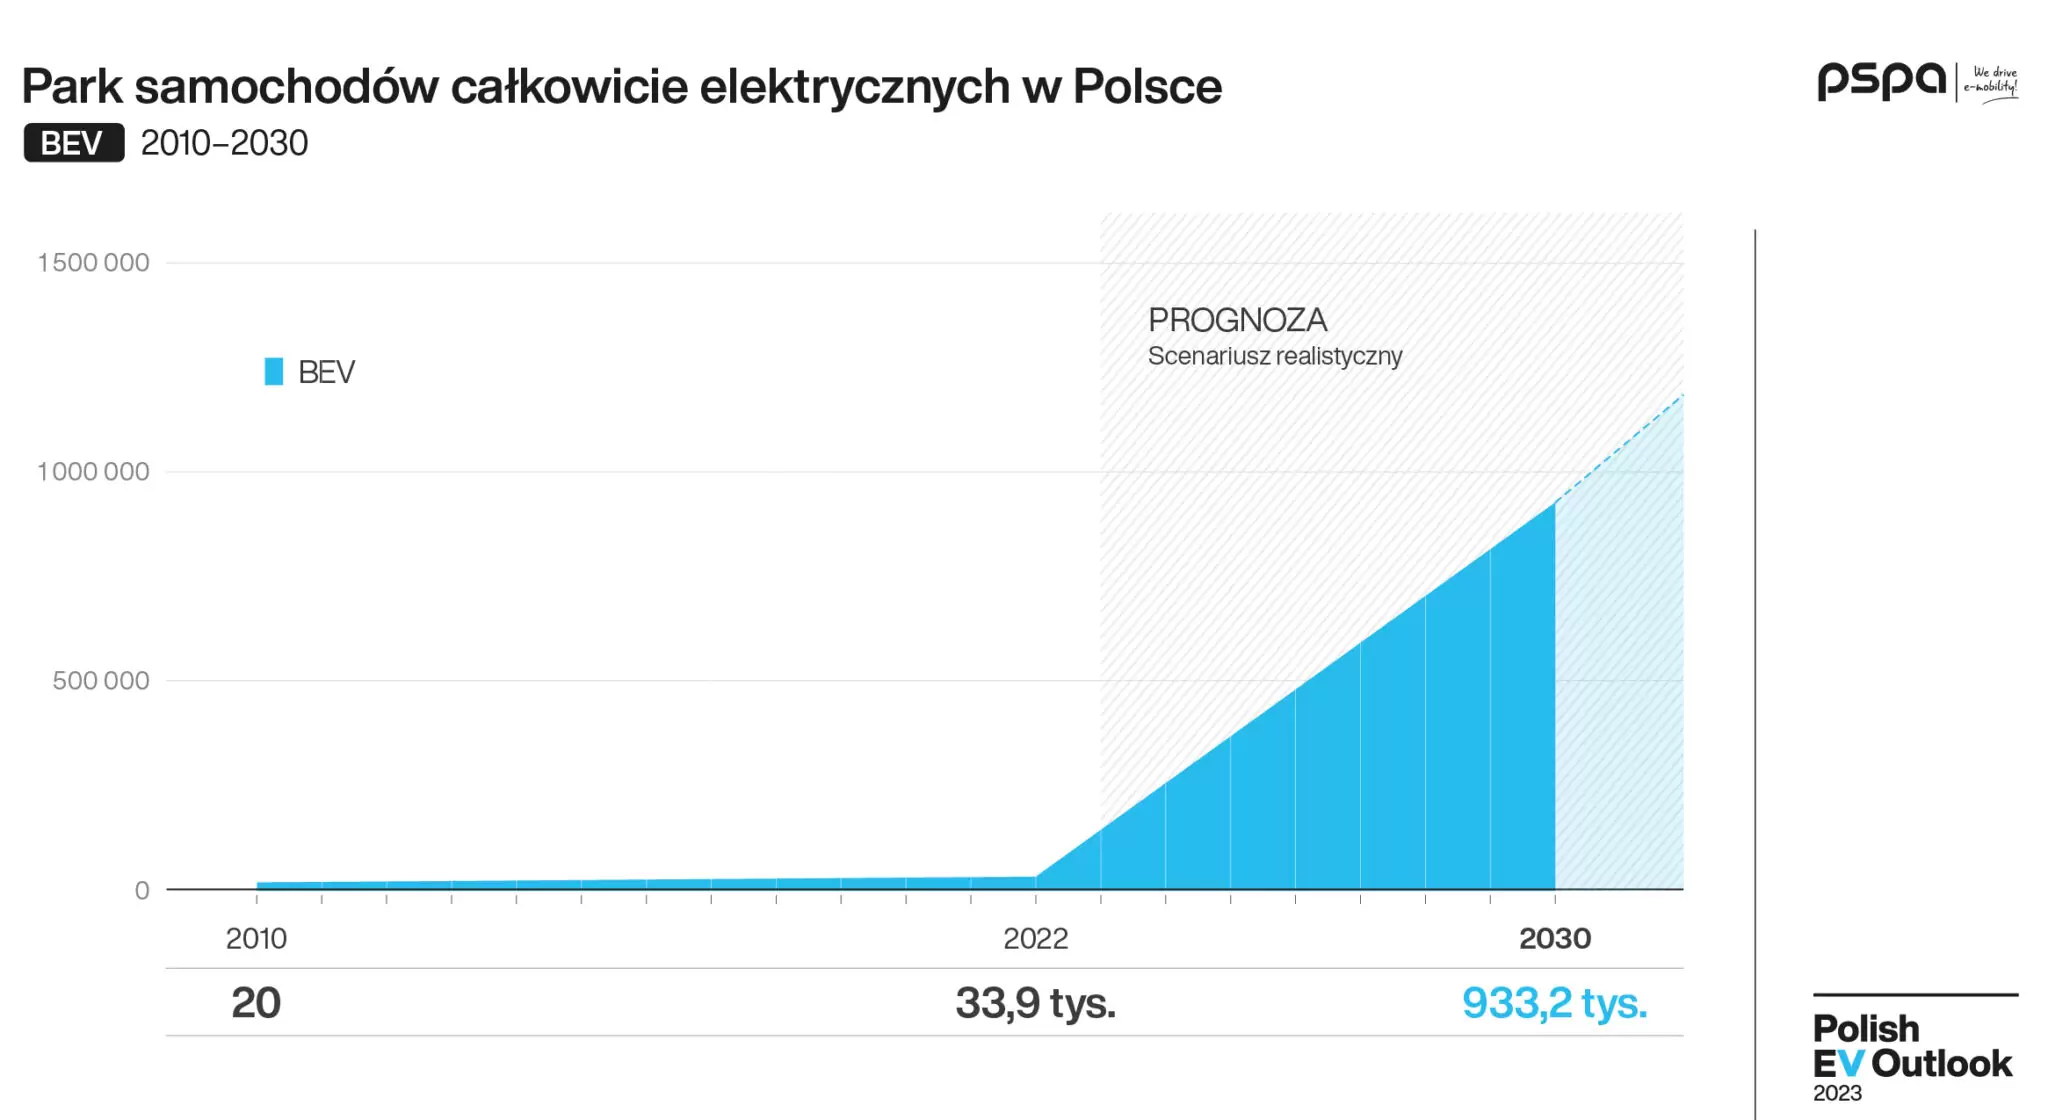 0003 Polish EV Outlook 2023 wyd I komunikat grafika pojazdy 02 1 e1680151284866 2048x1120.jpg